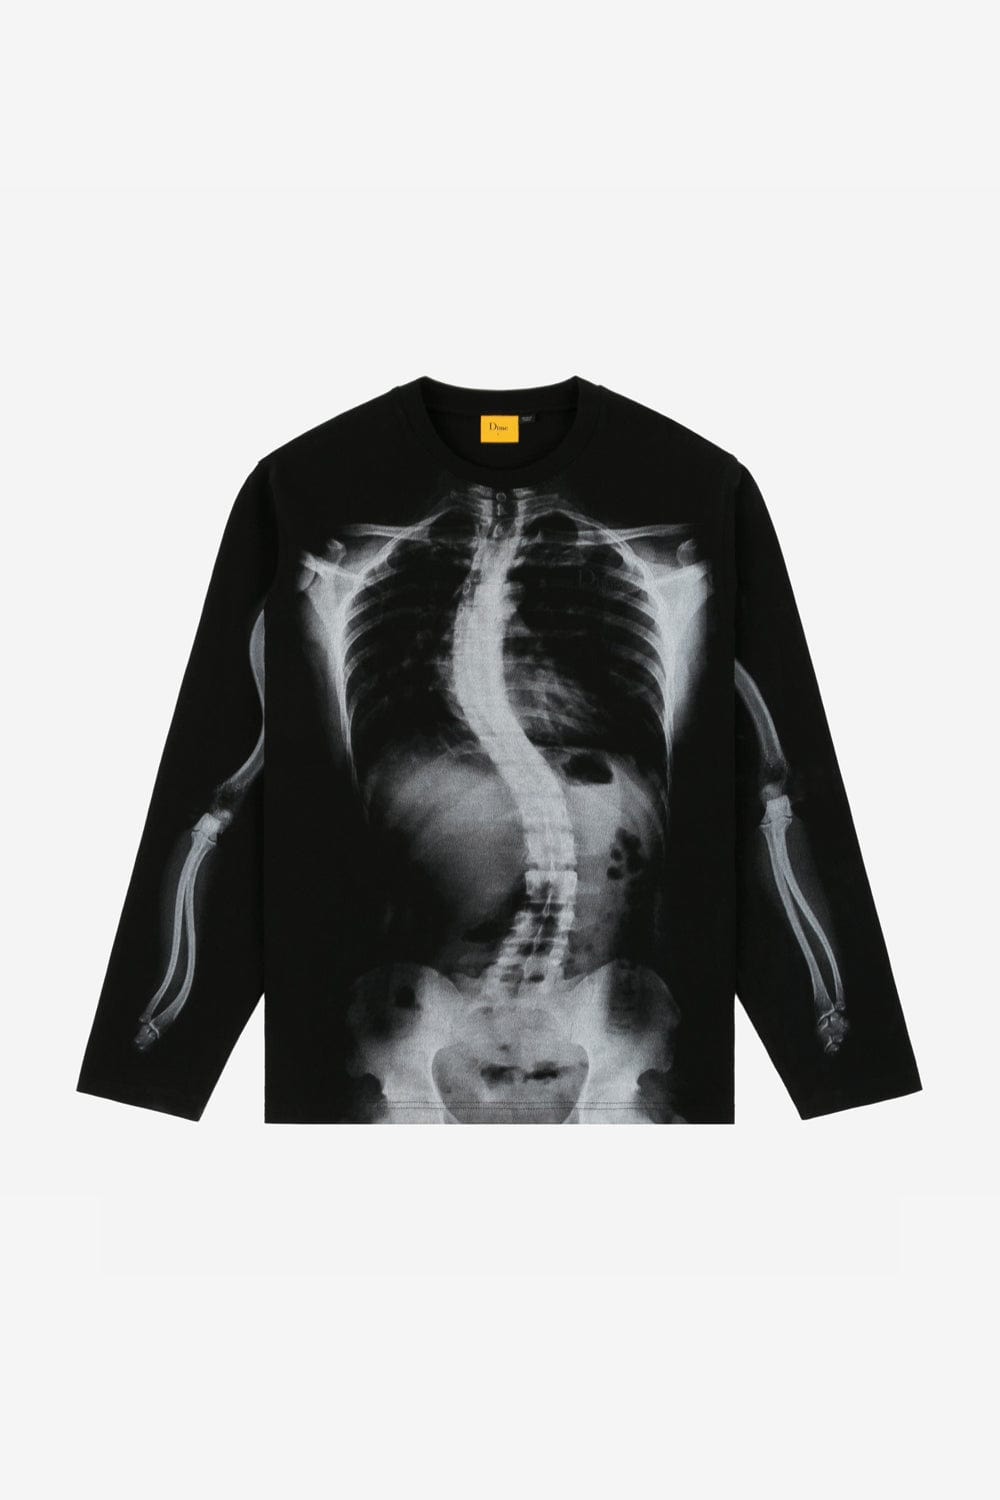 Dime Wavy Bones Terry Longsleeve Shirt (Black)